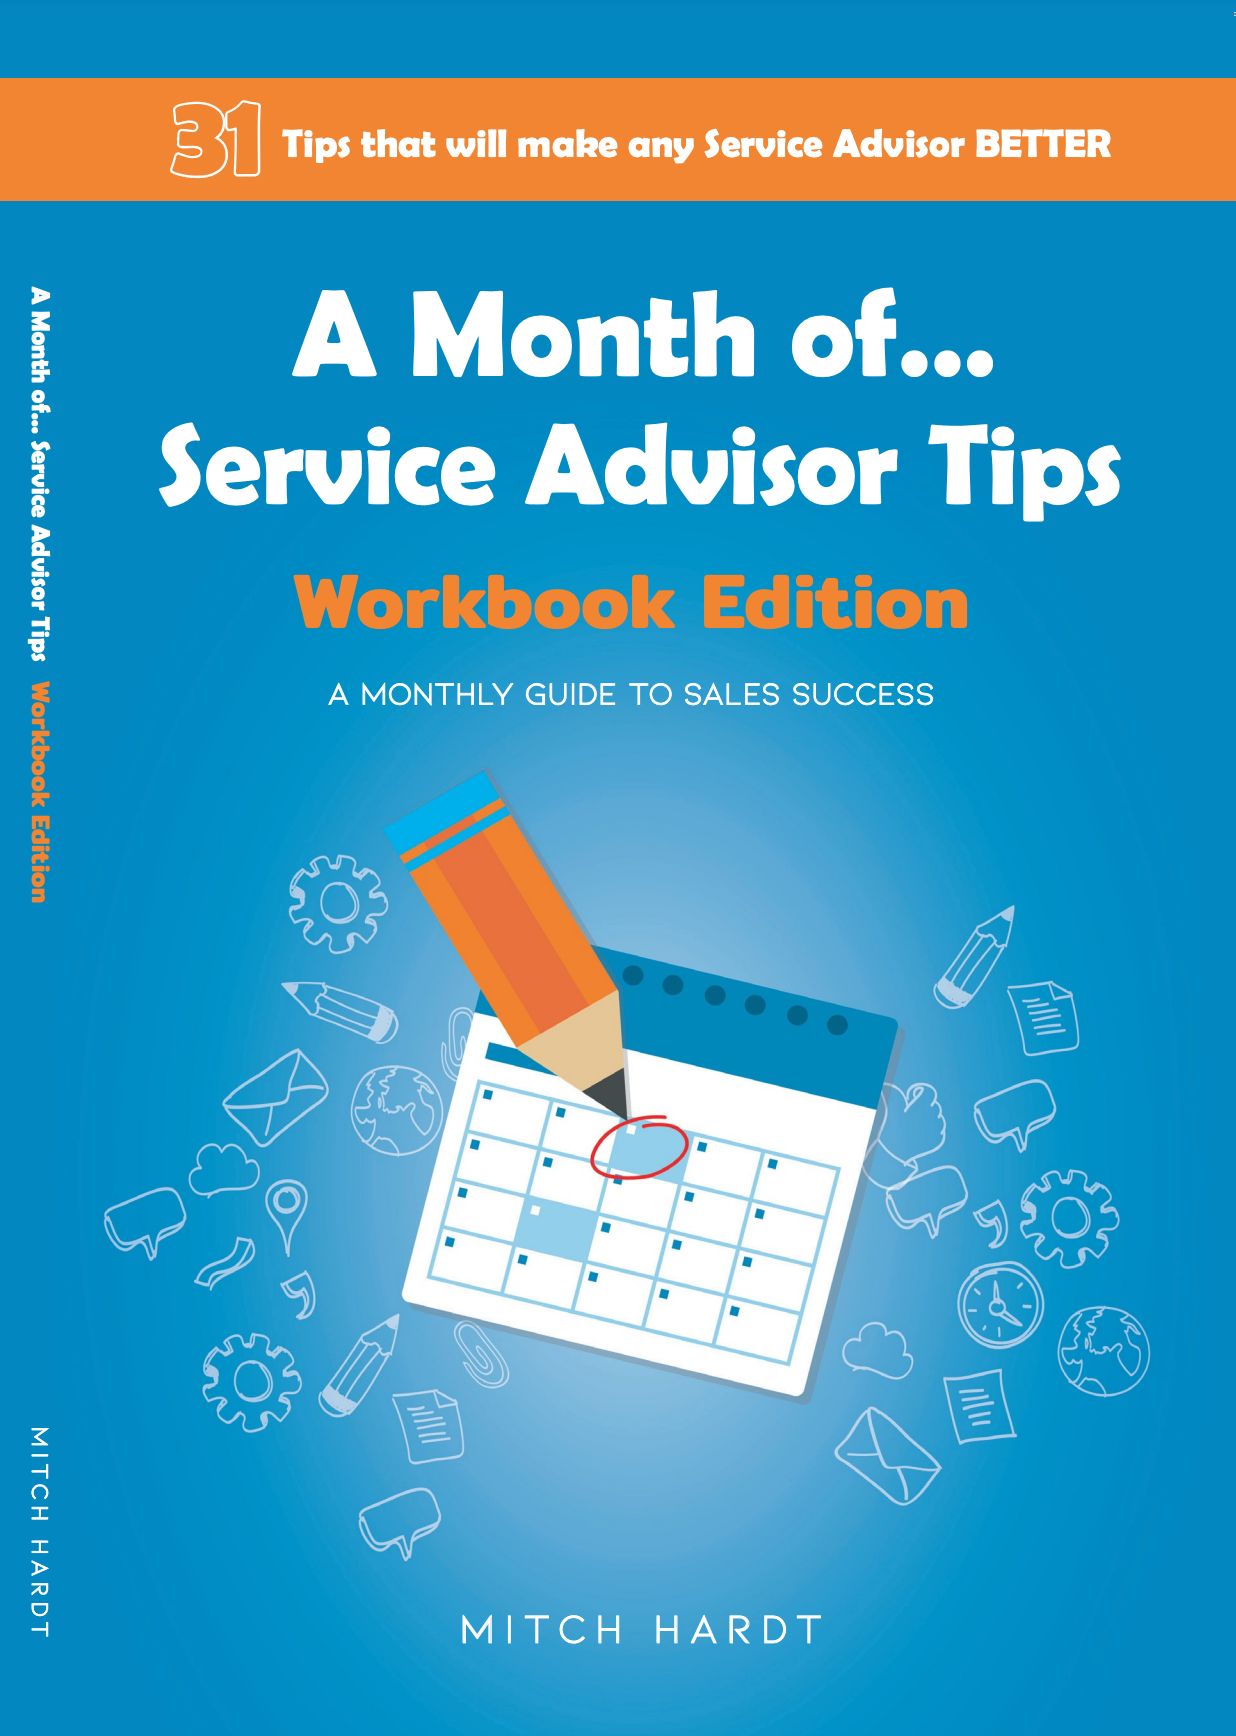 Service Advisor Tips Workbook Edition